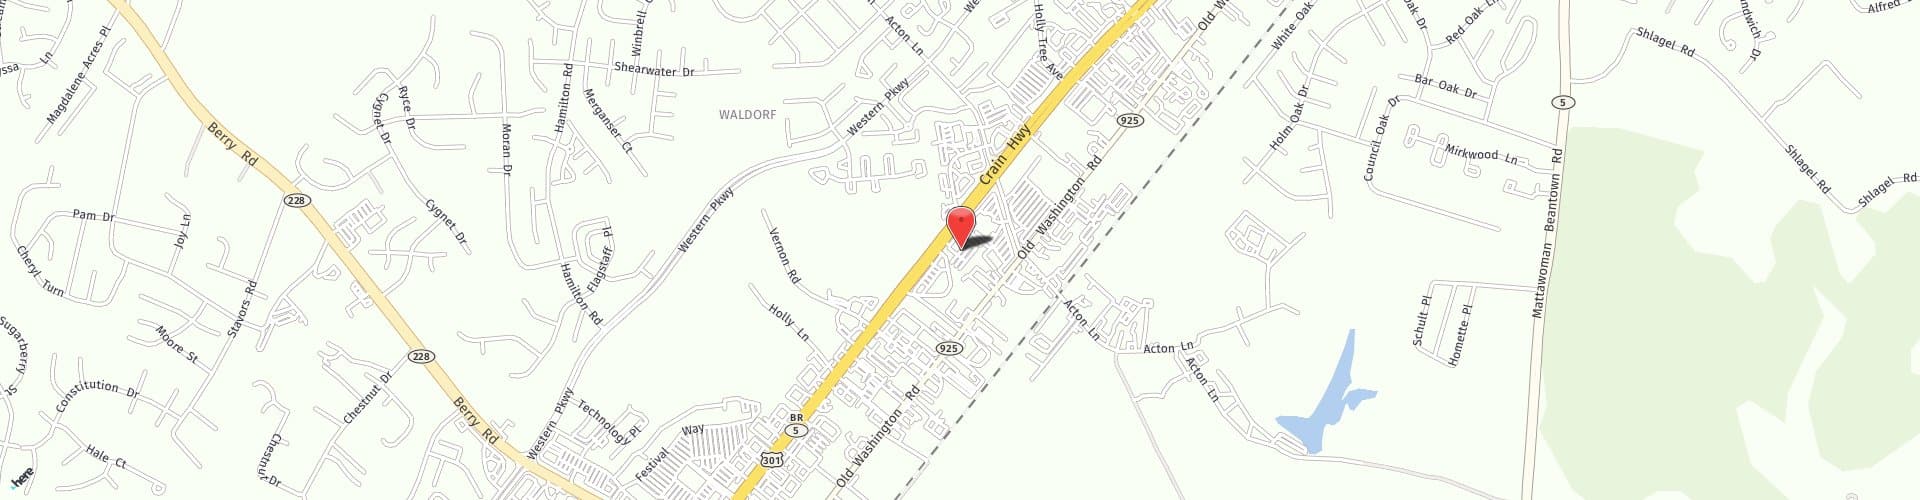 Location Map: 2670 Crain Highway Waldorf, MD 20601